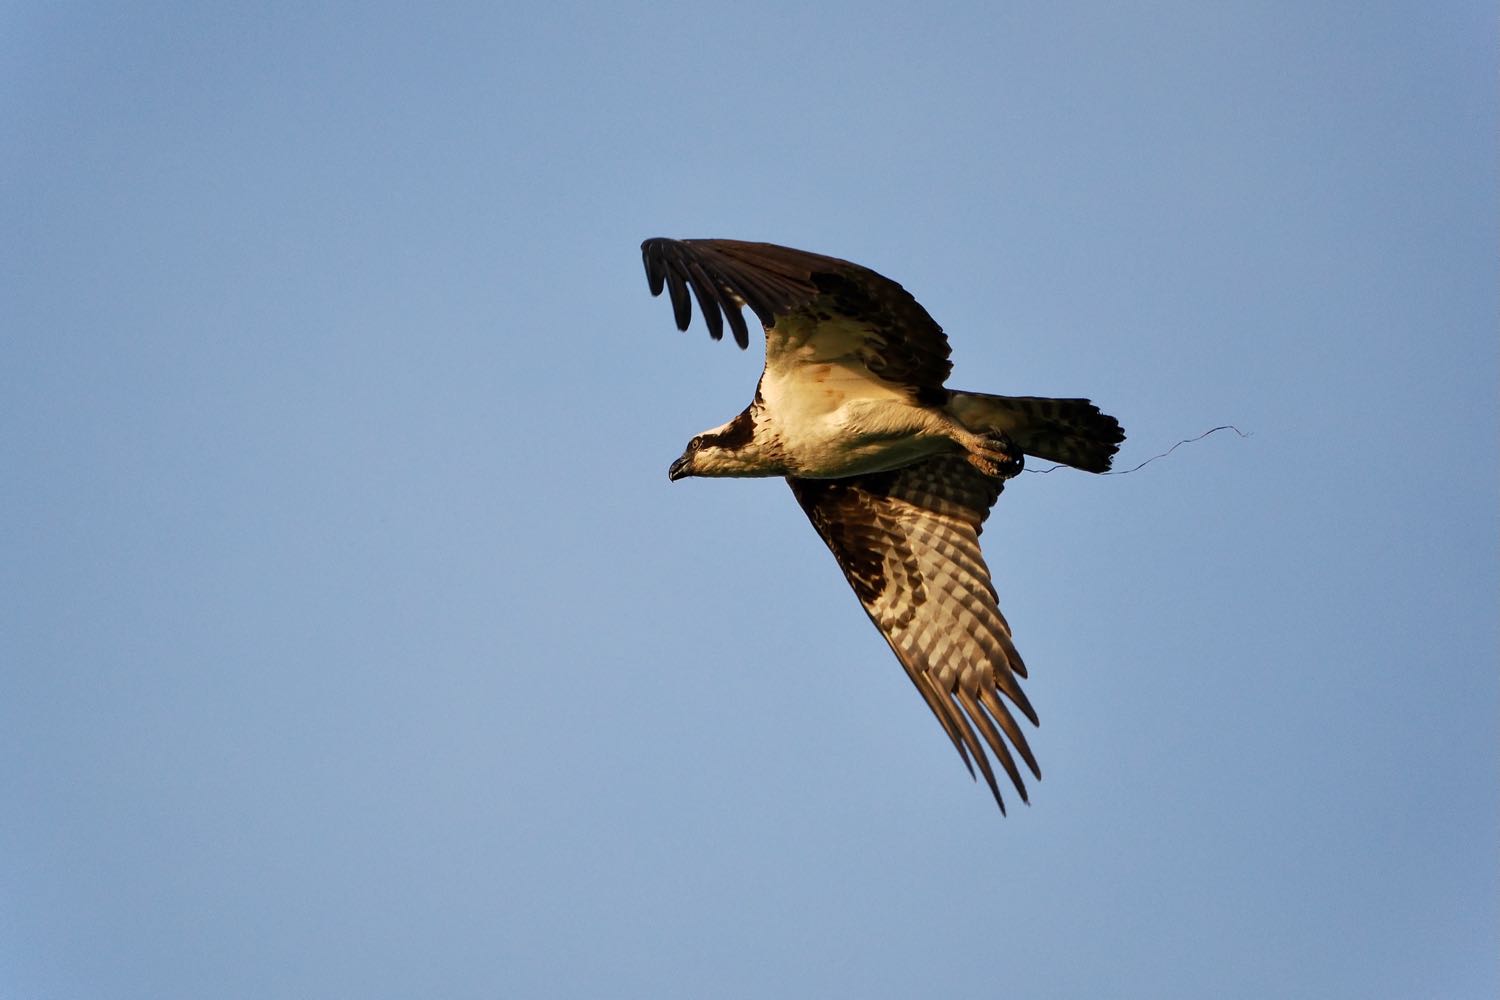 Closeup photo of an Osprey in flight against a blue sky.